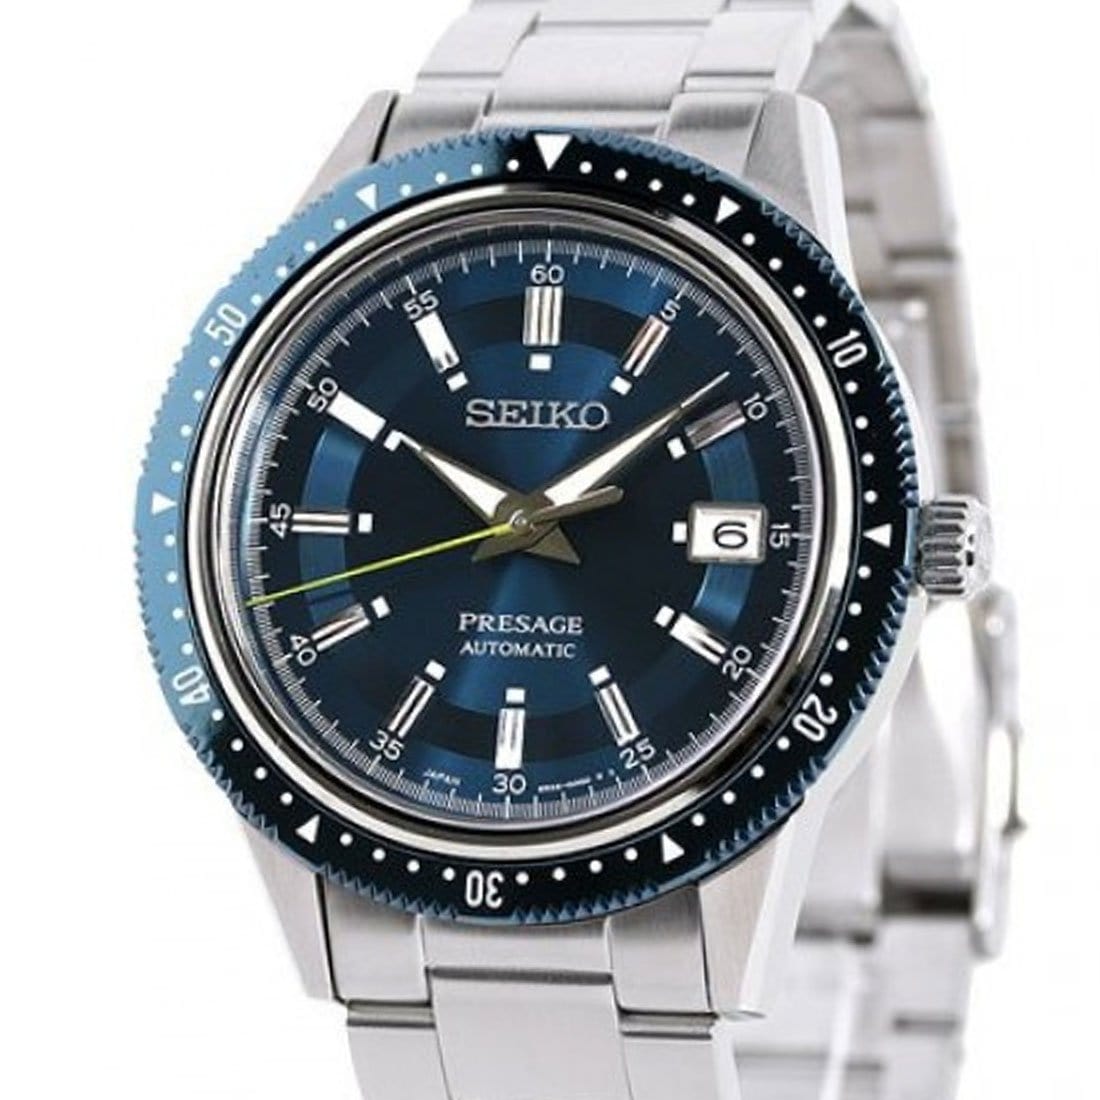 SARX081 Seiko Presage 2020 Automatic JDM Limited Edition Watch